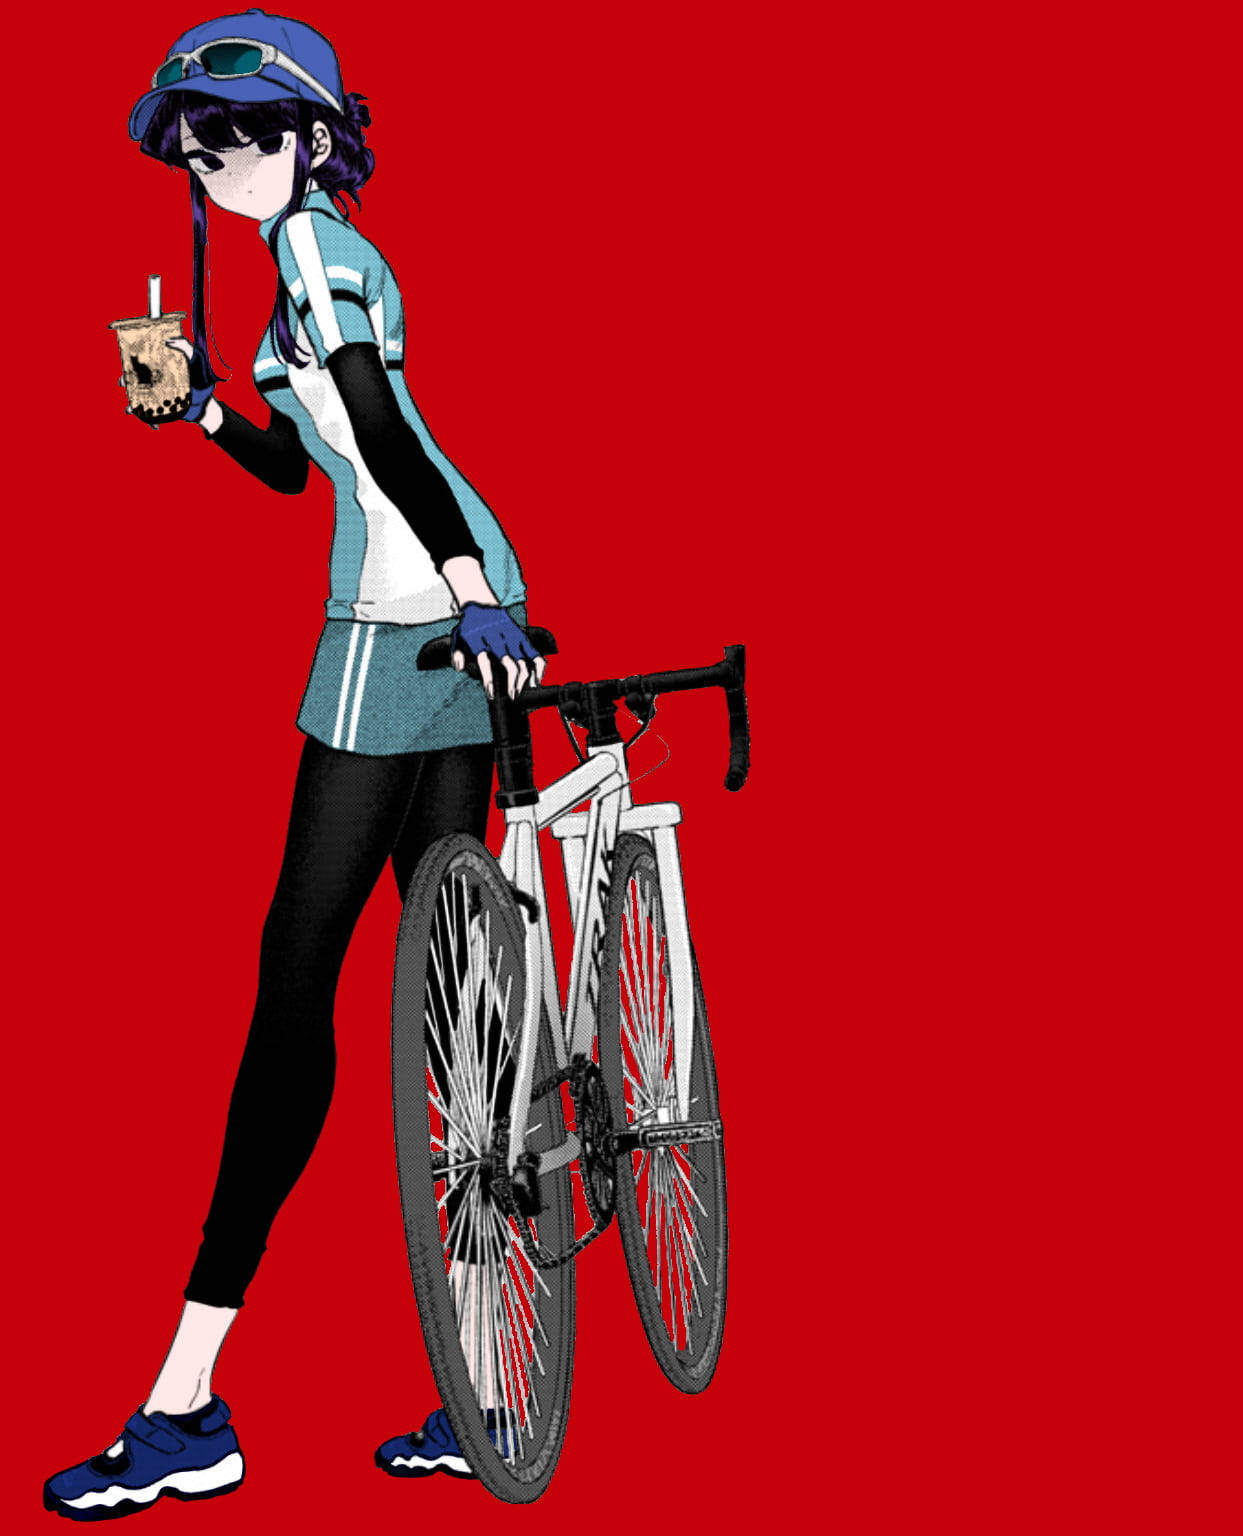 Komisan Con Su Bicicleta De Carretera Fondo de pantalla